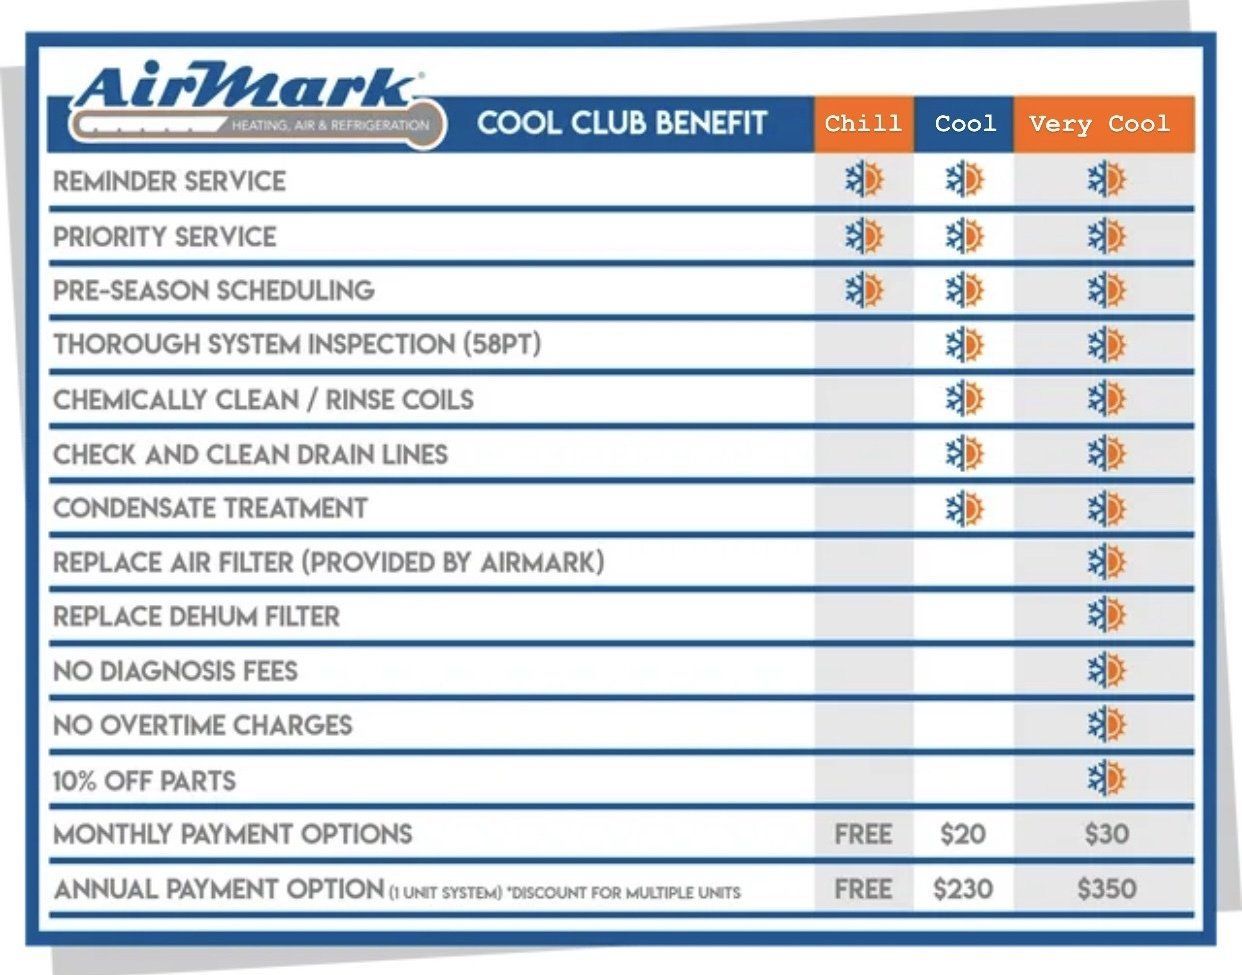 AirMark Cool Club Benefit Chart